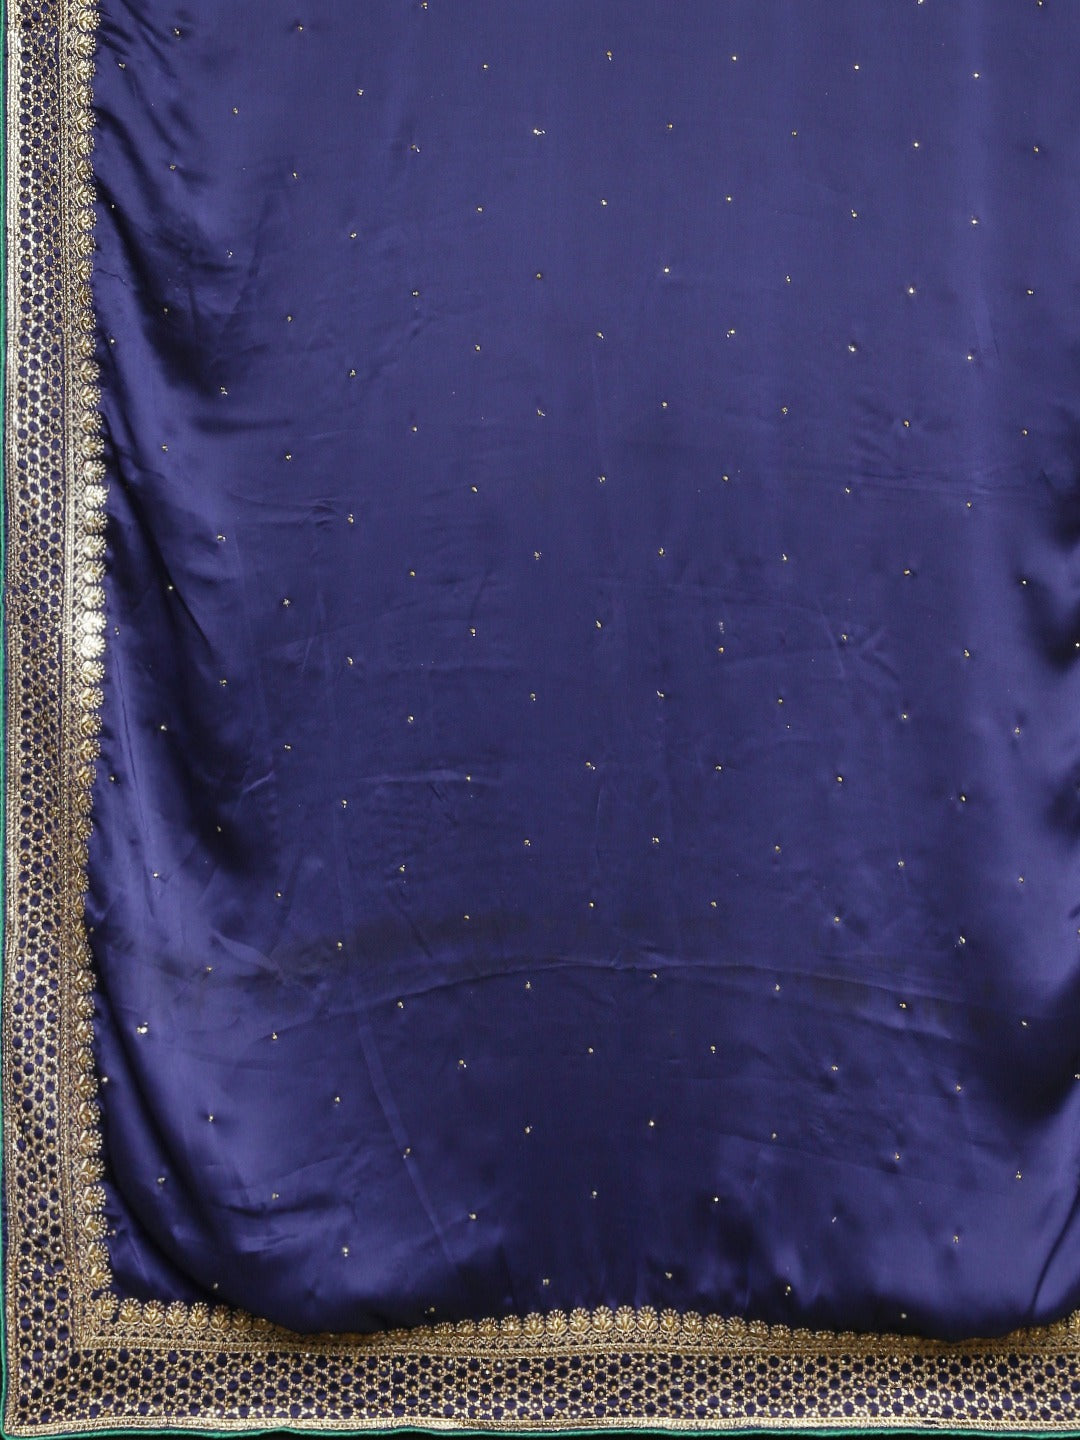 Neeru's Blue Embellished Saree With Blouse